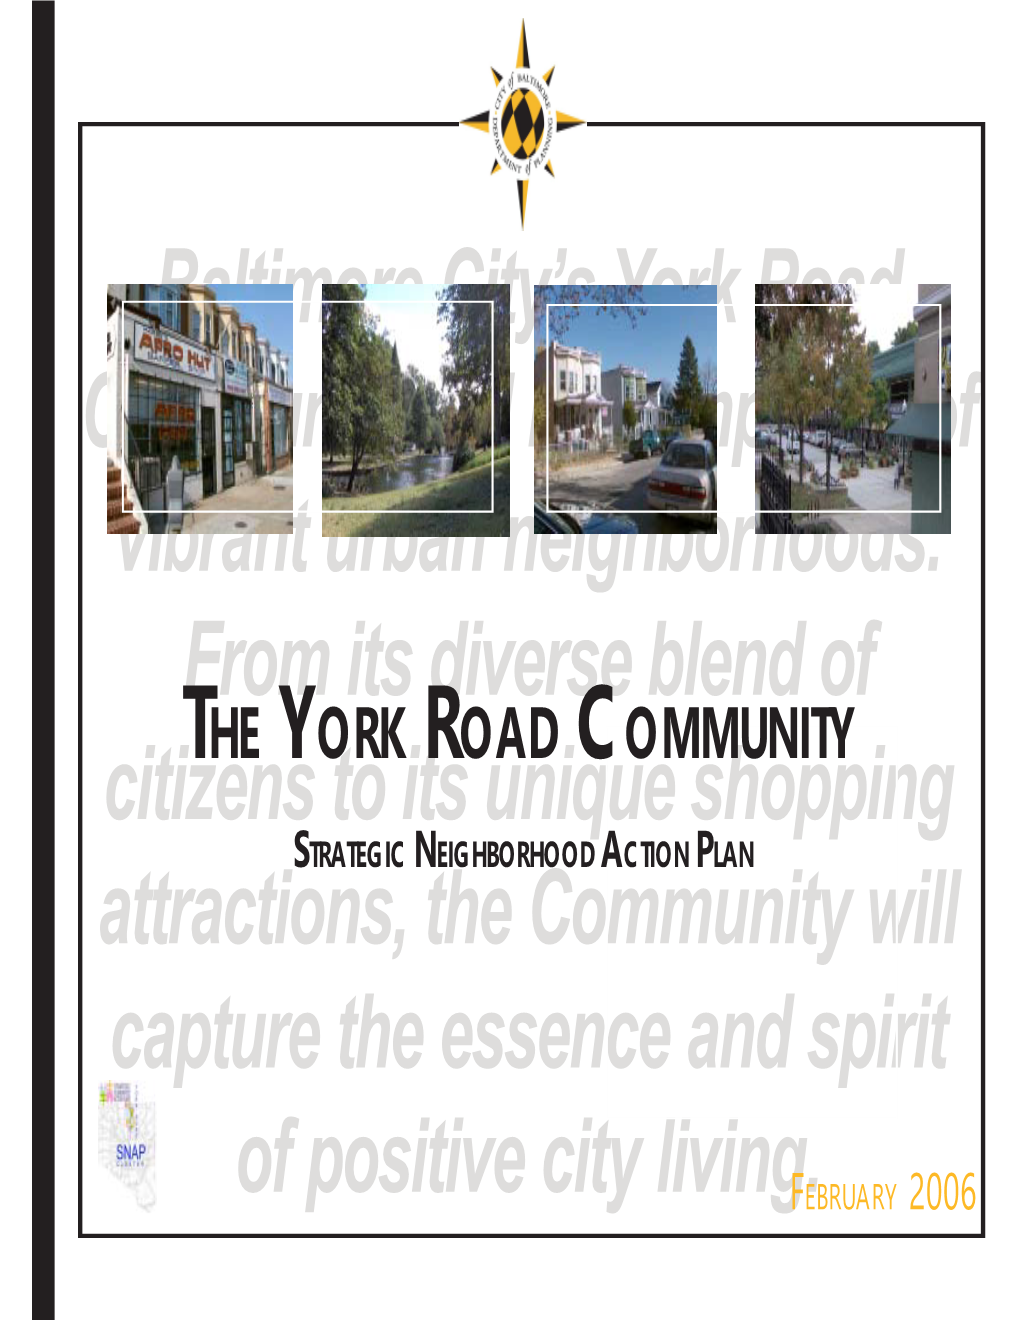 York Road Community (SNAP)